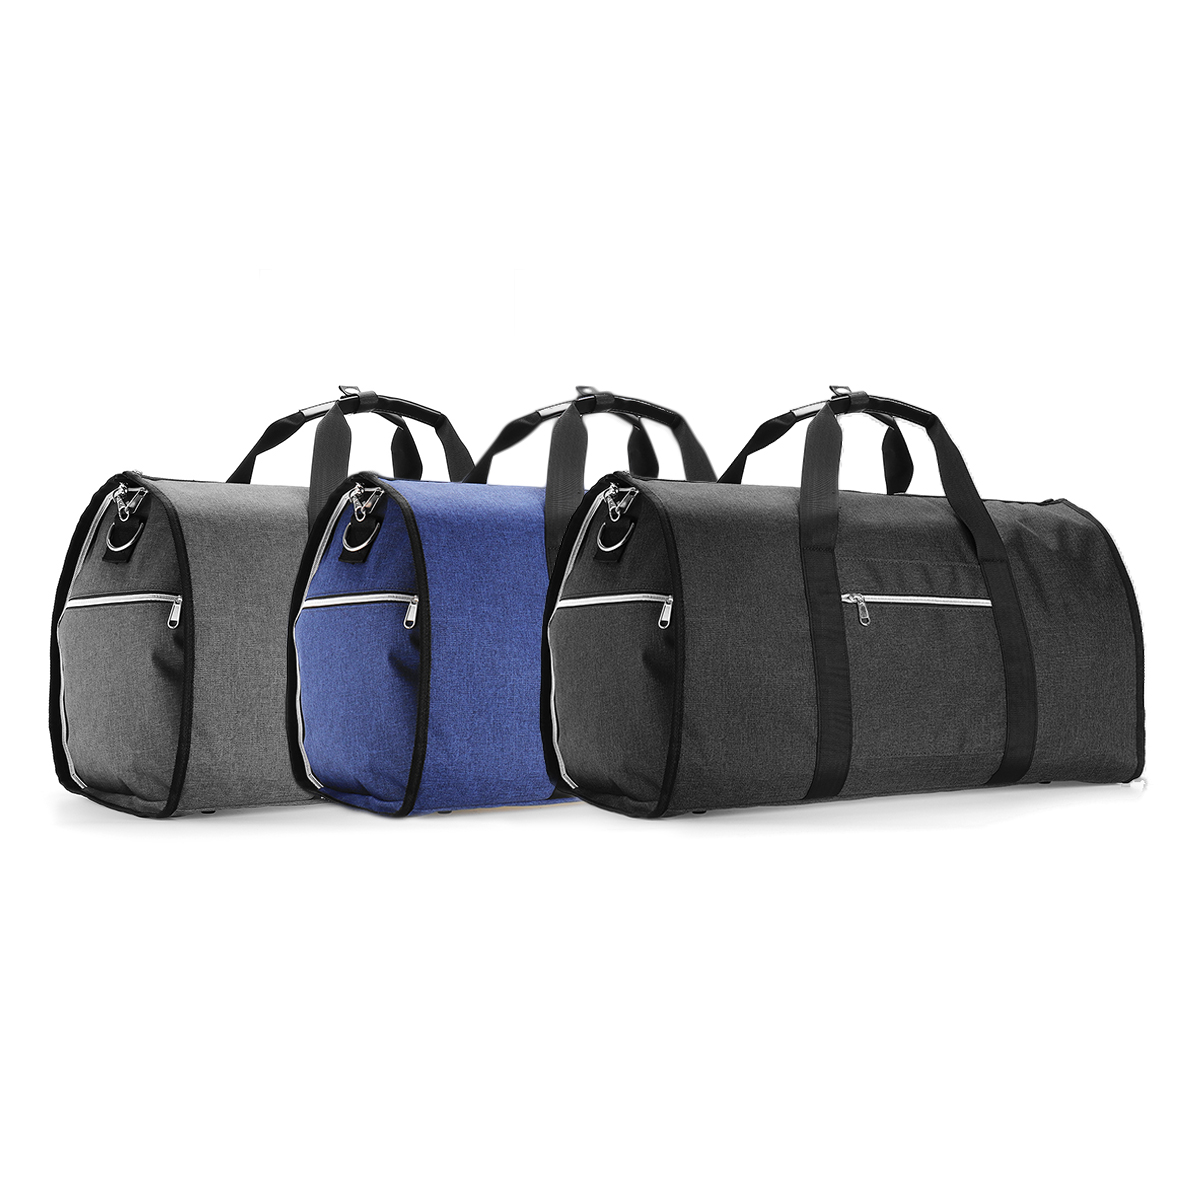 47L-Outdoor-Portable-Travel-Luggage-Bag-Suit-Dress-Garment-Storage-Handbag-Sports-Gym-Bag-1553950-2